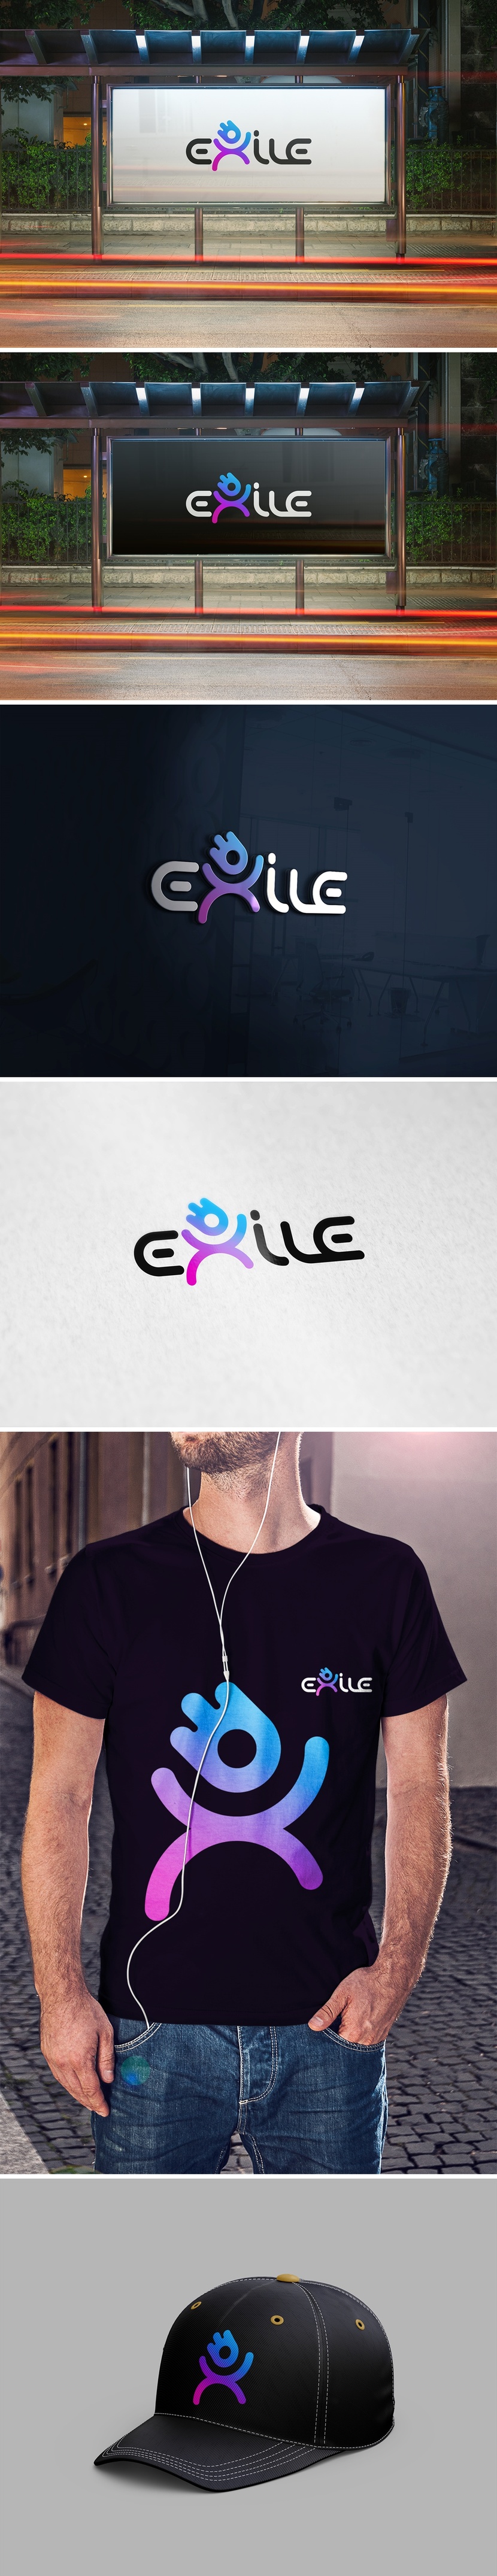 EXILE - Разработка логотипа и фирменного стиля EXILE